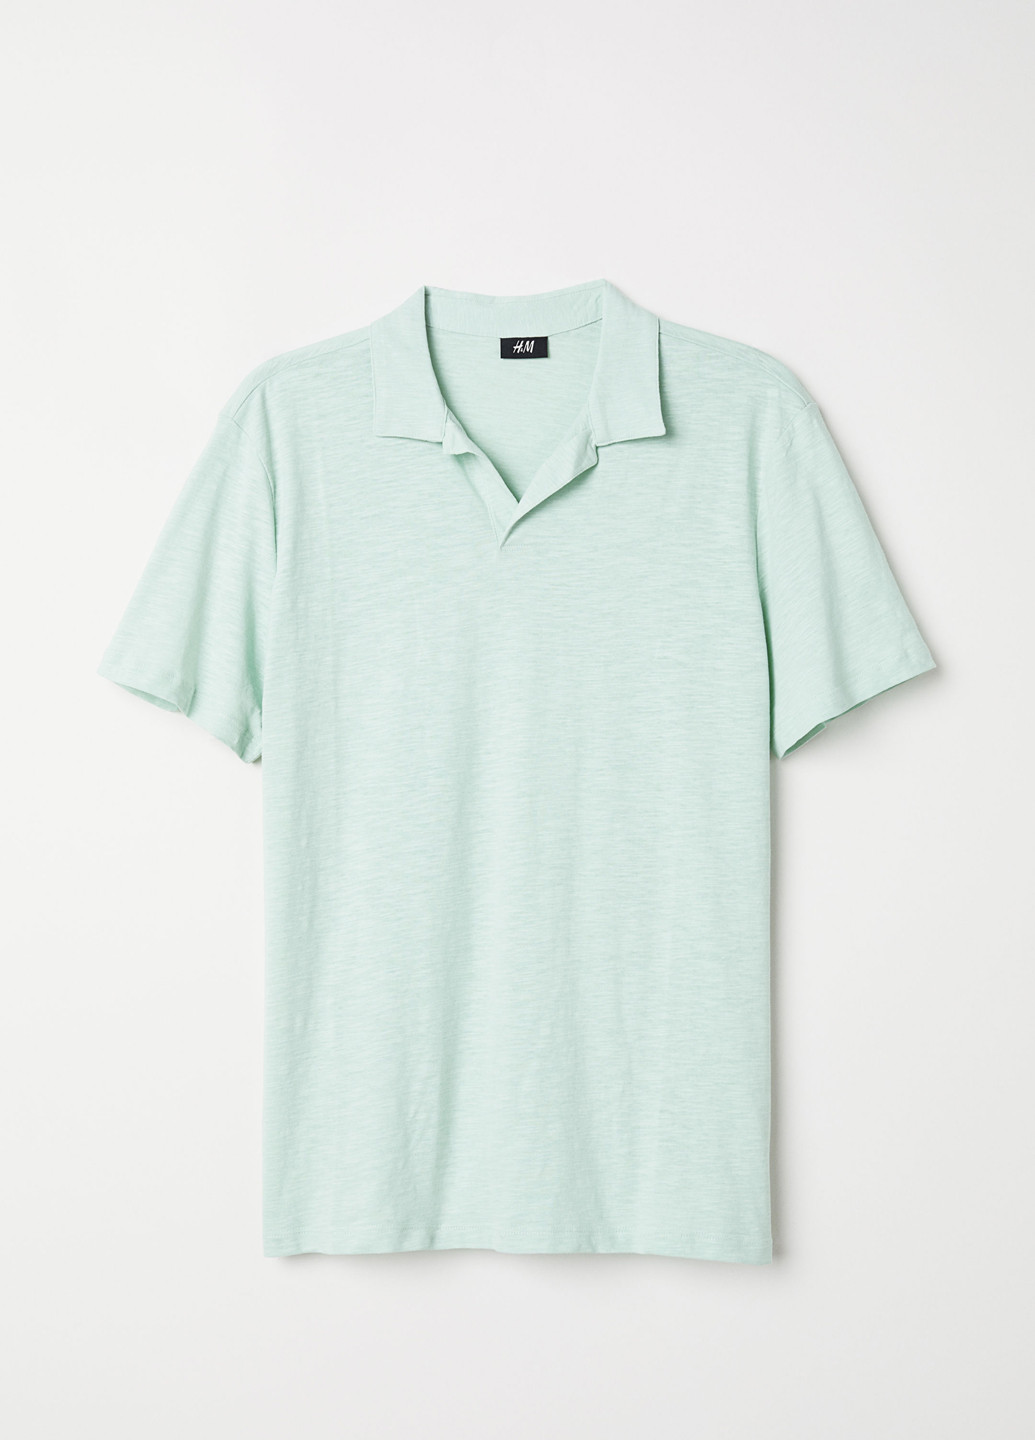 Мятная футболка-поло для мужчин H&M однотонная